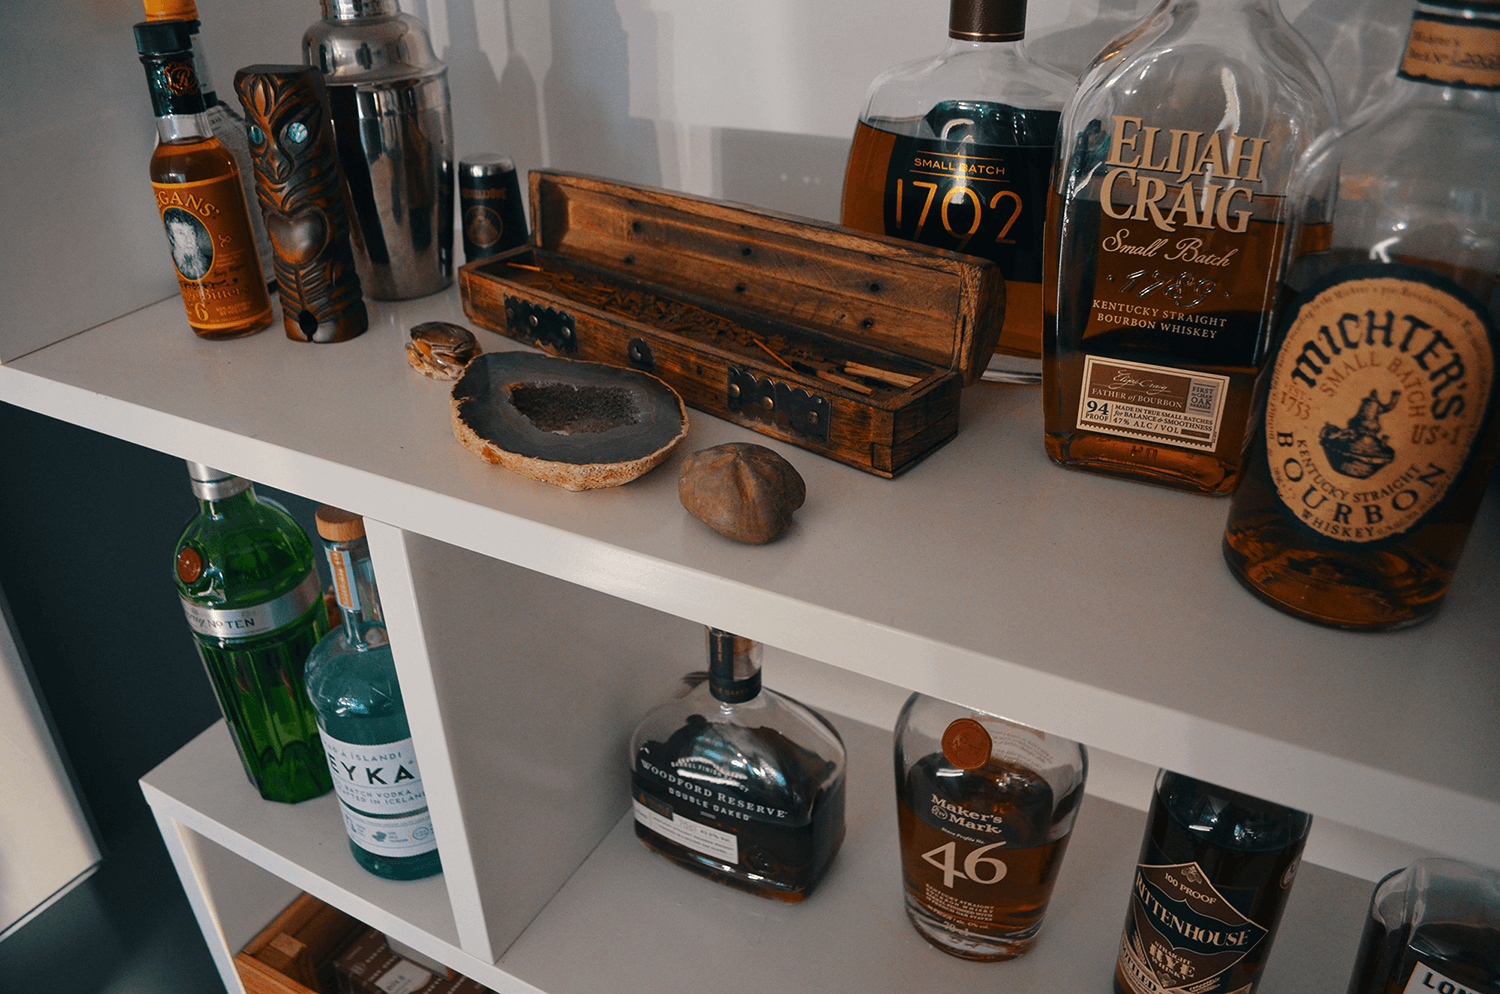 A shelf with James’ favourite items